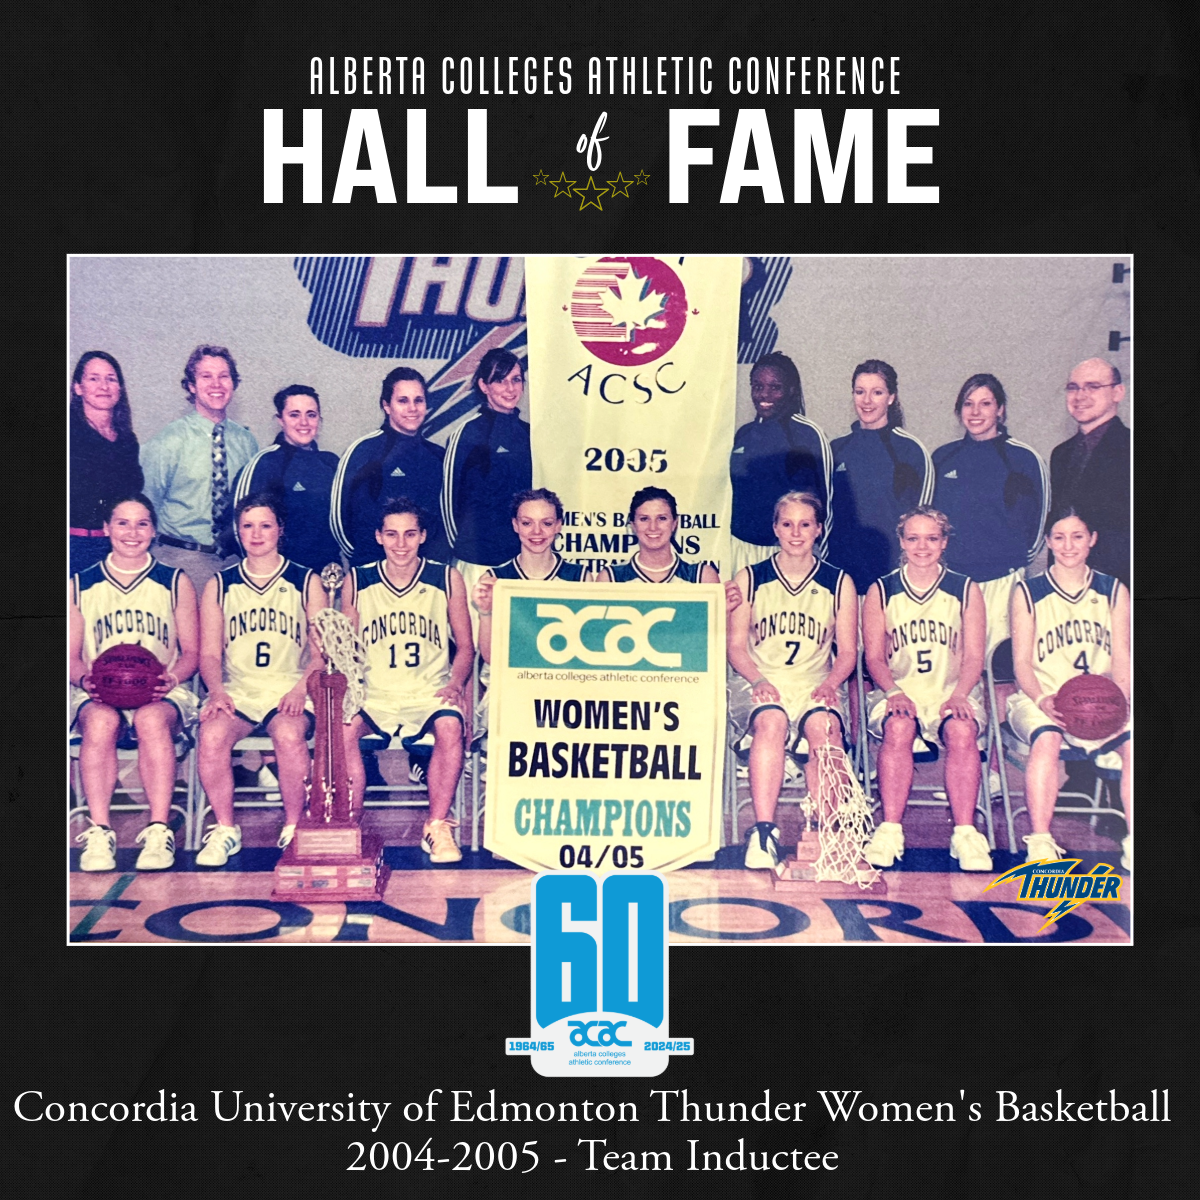 ACAC Hall of Fame Team Inductee: Concordia University of Edmonton ThundeR Women's Basketball Team